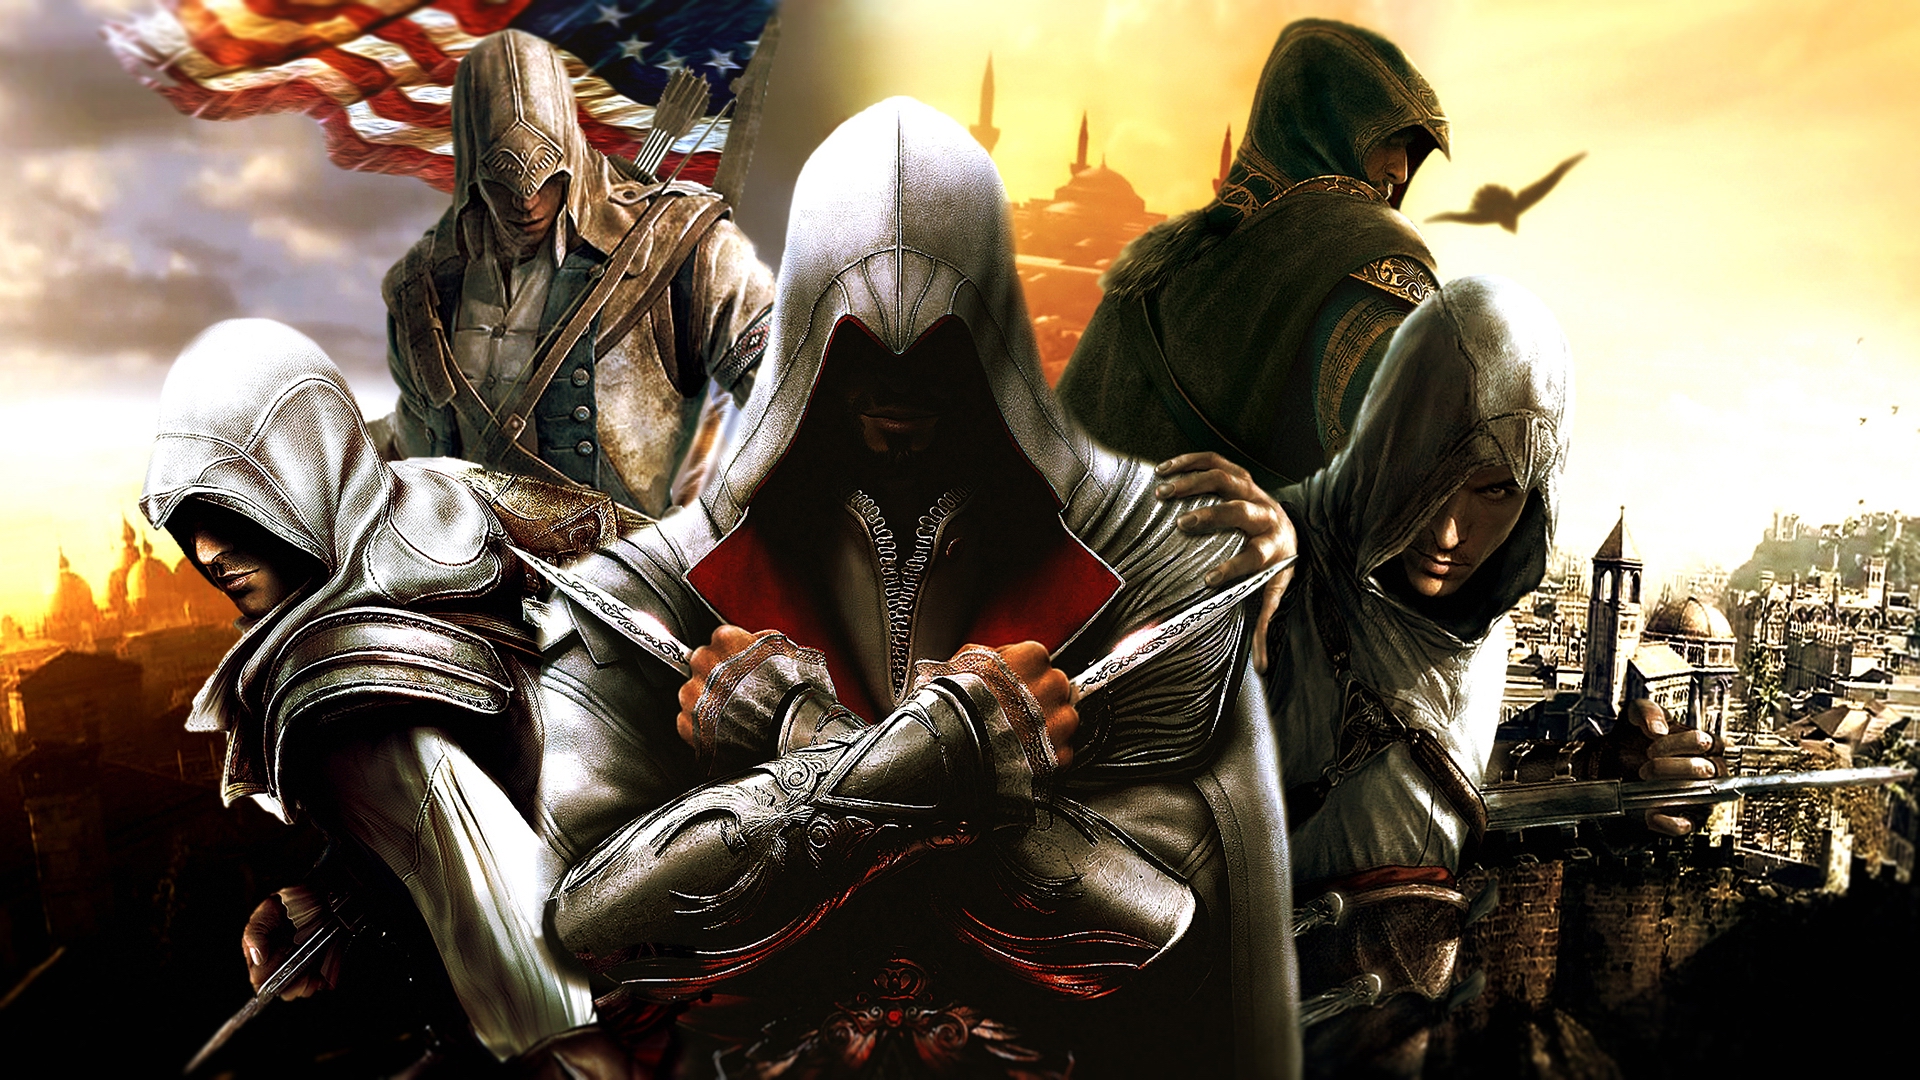 Assassins Creed Assassins Creed